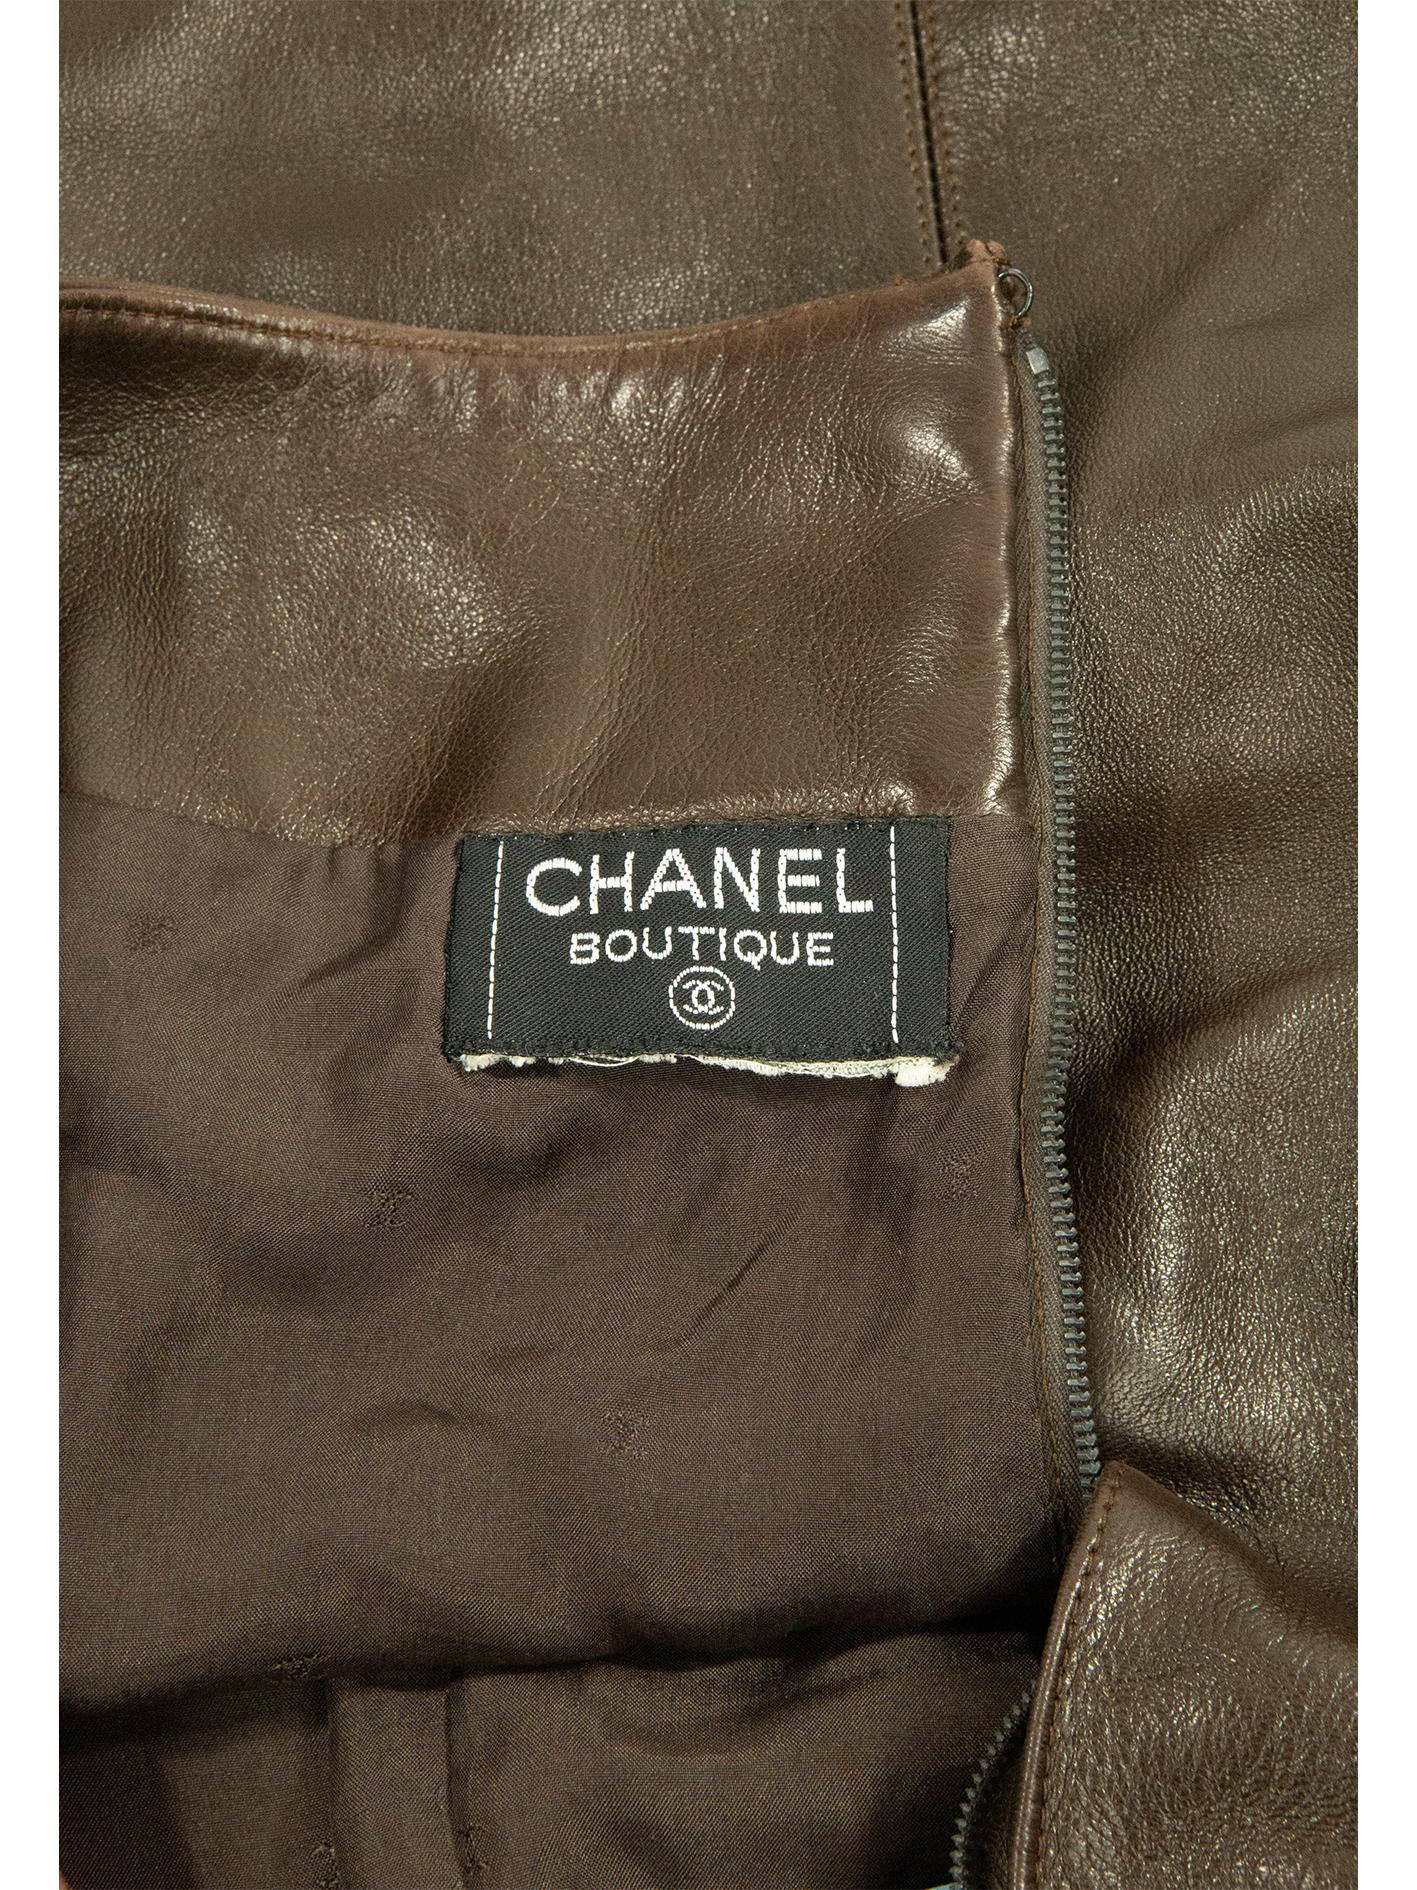 Chanel Boutique Schokoladenbrauner Lederrock Damen im Angebot